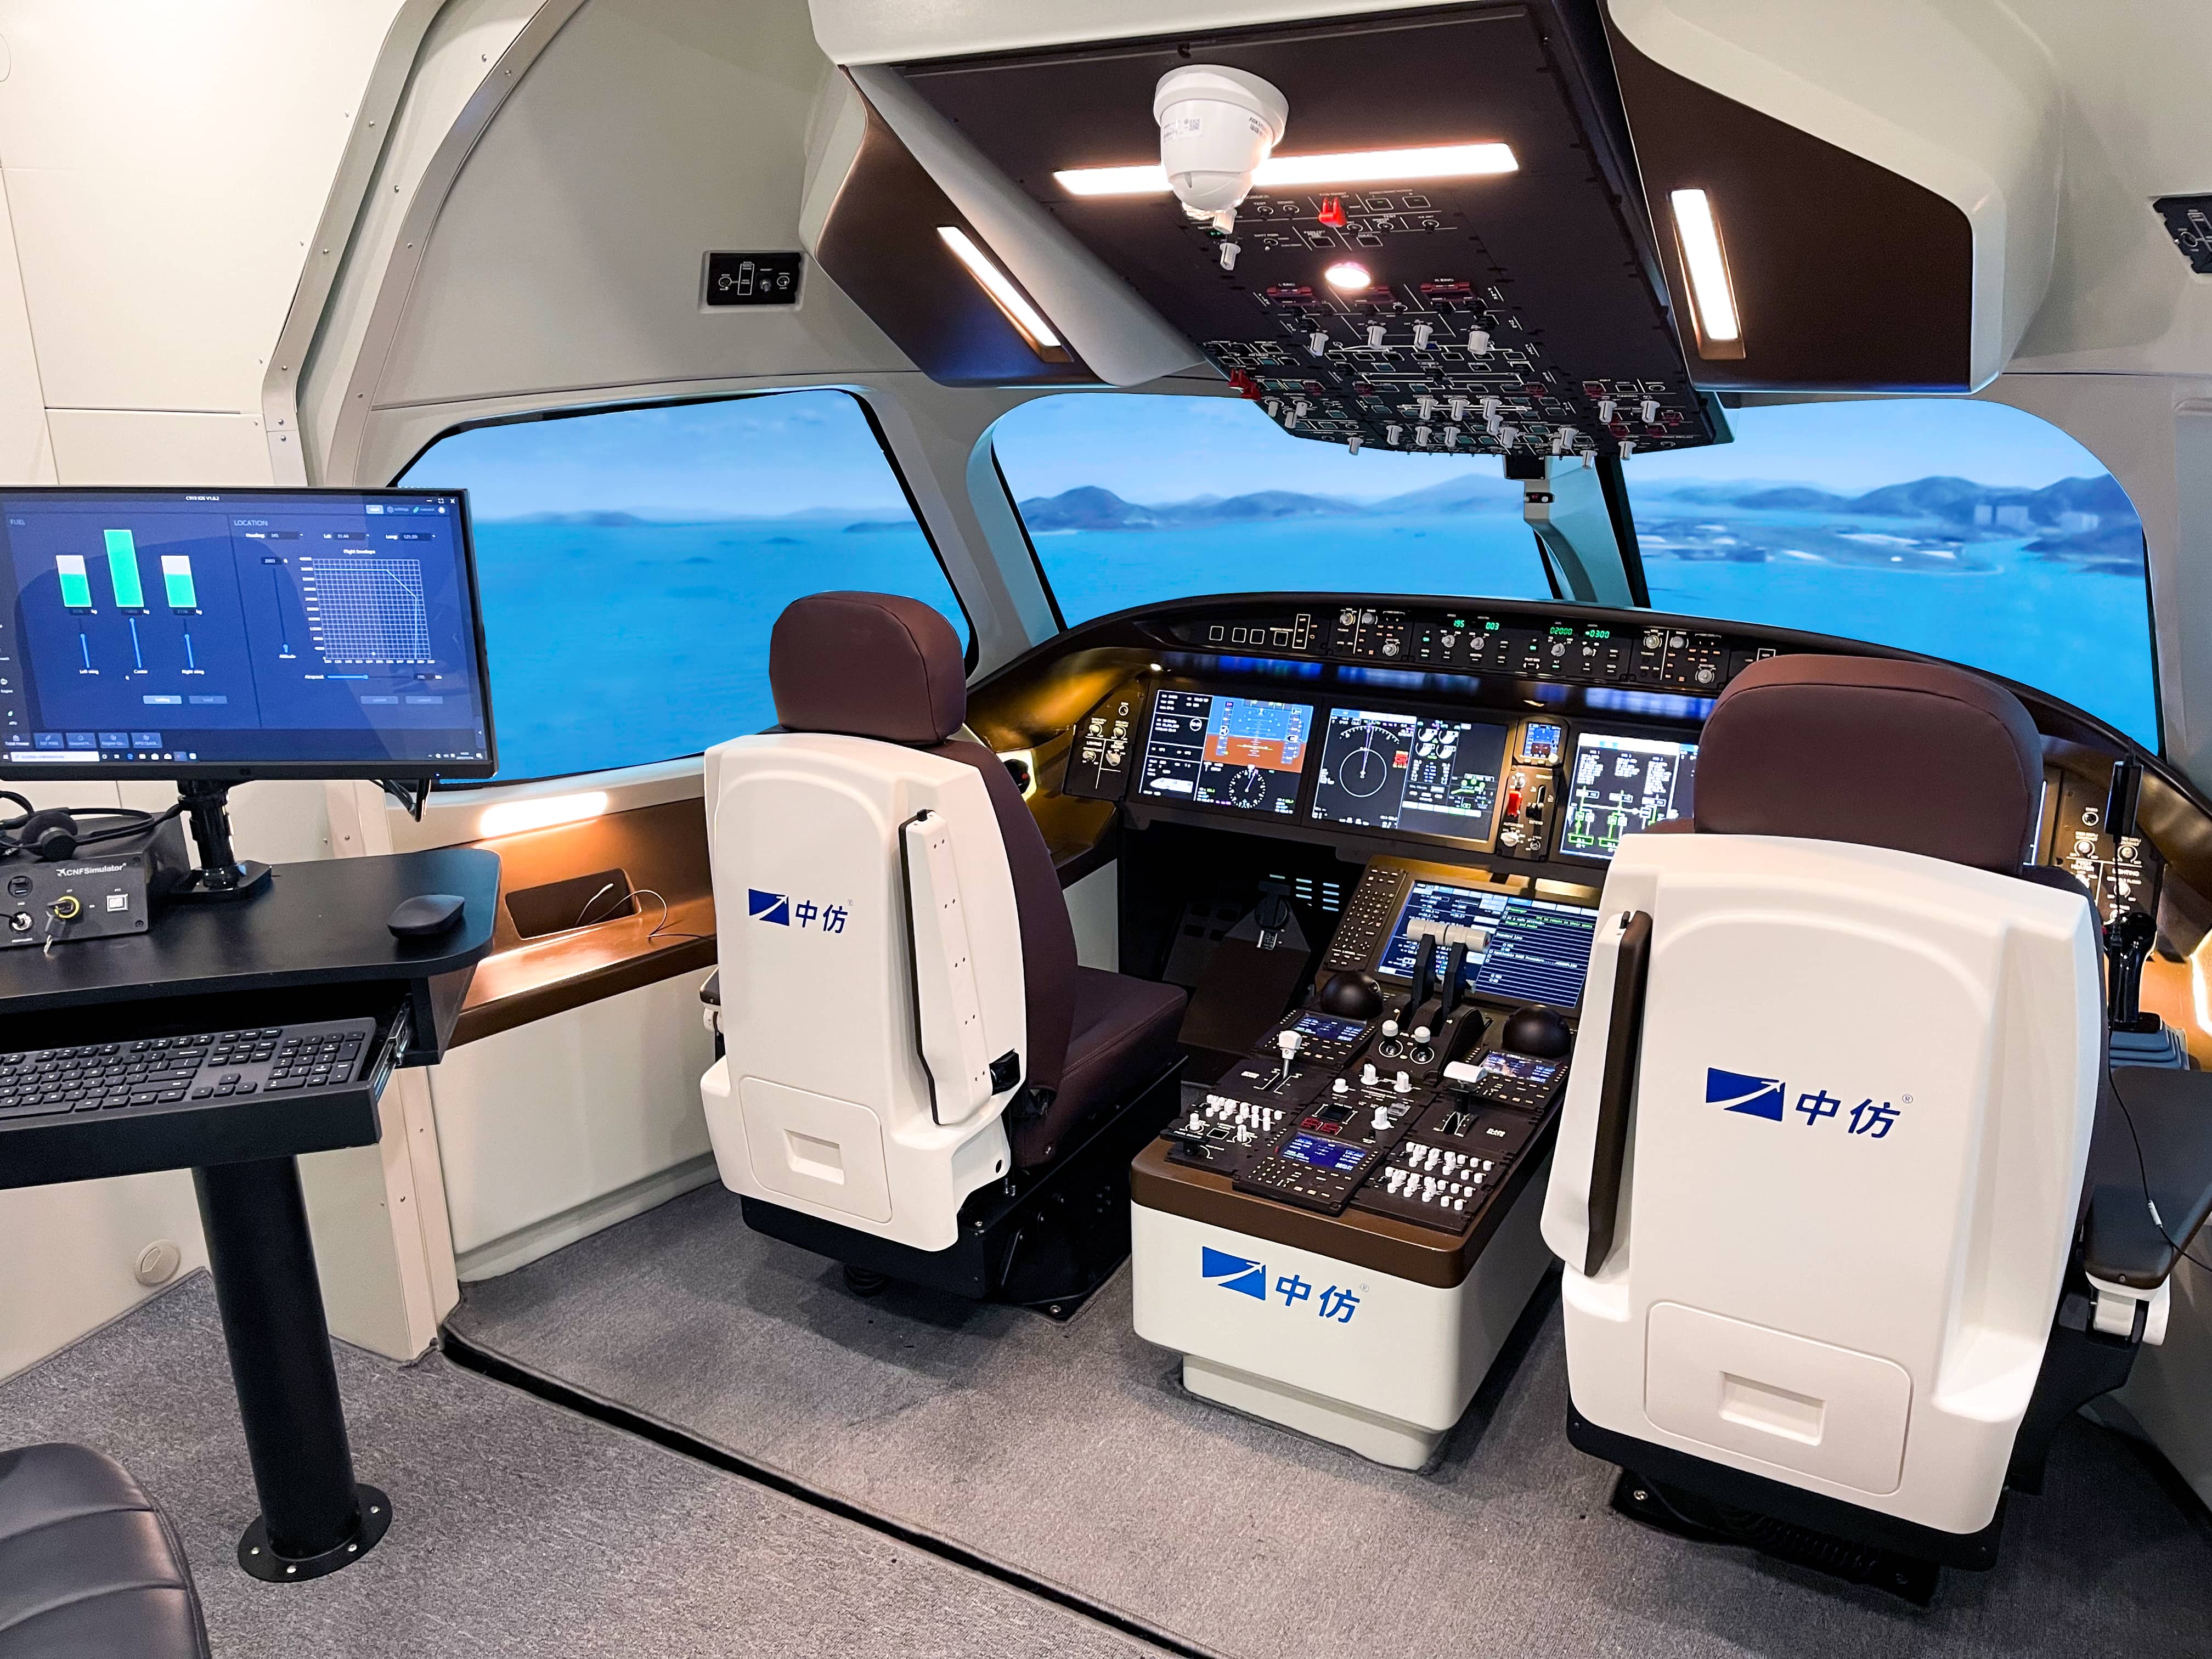 CnTech COMAC C919 flight simulator